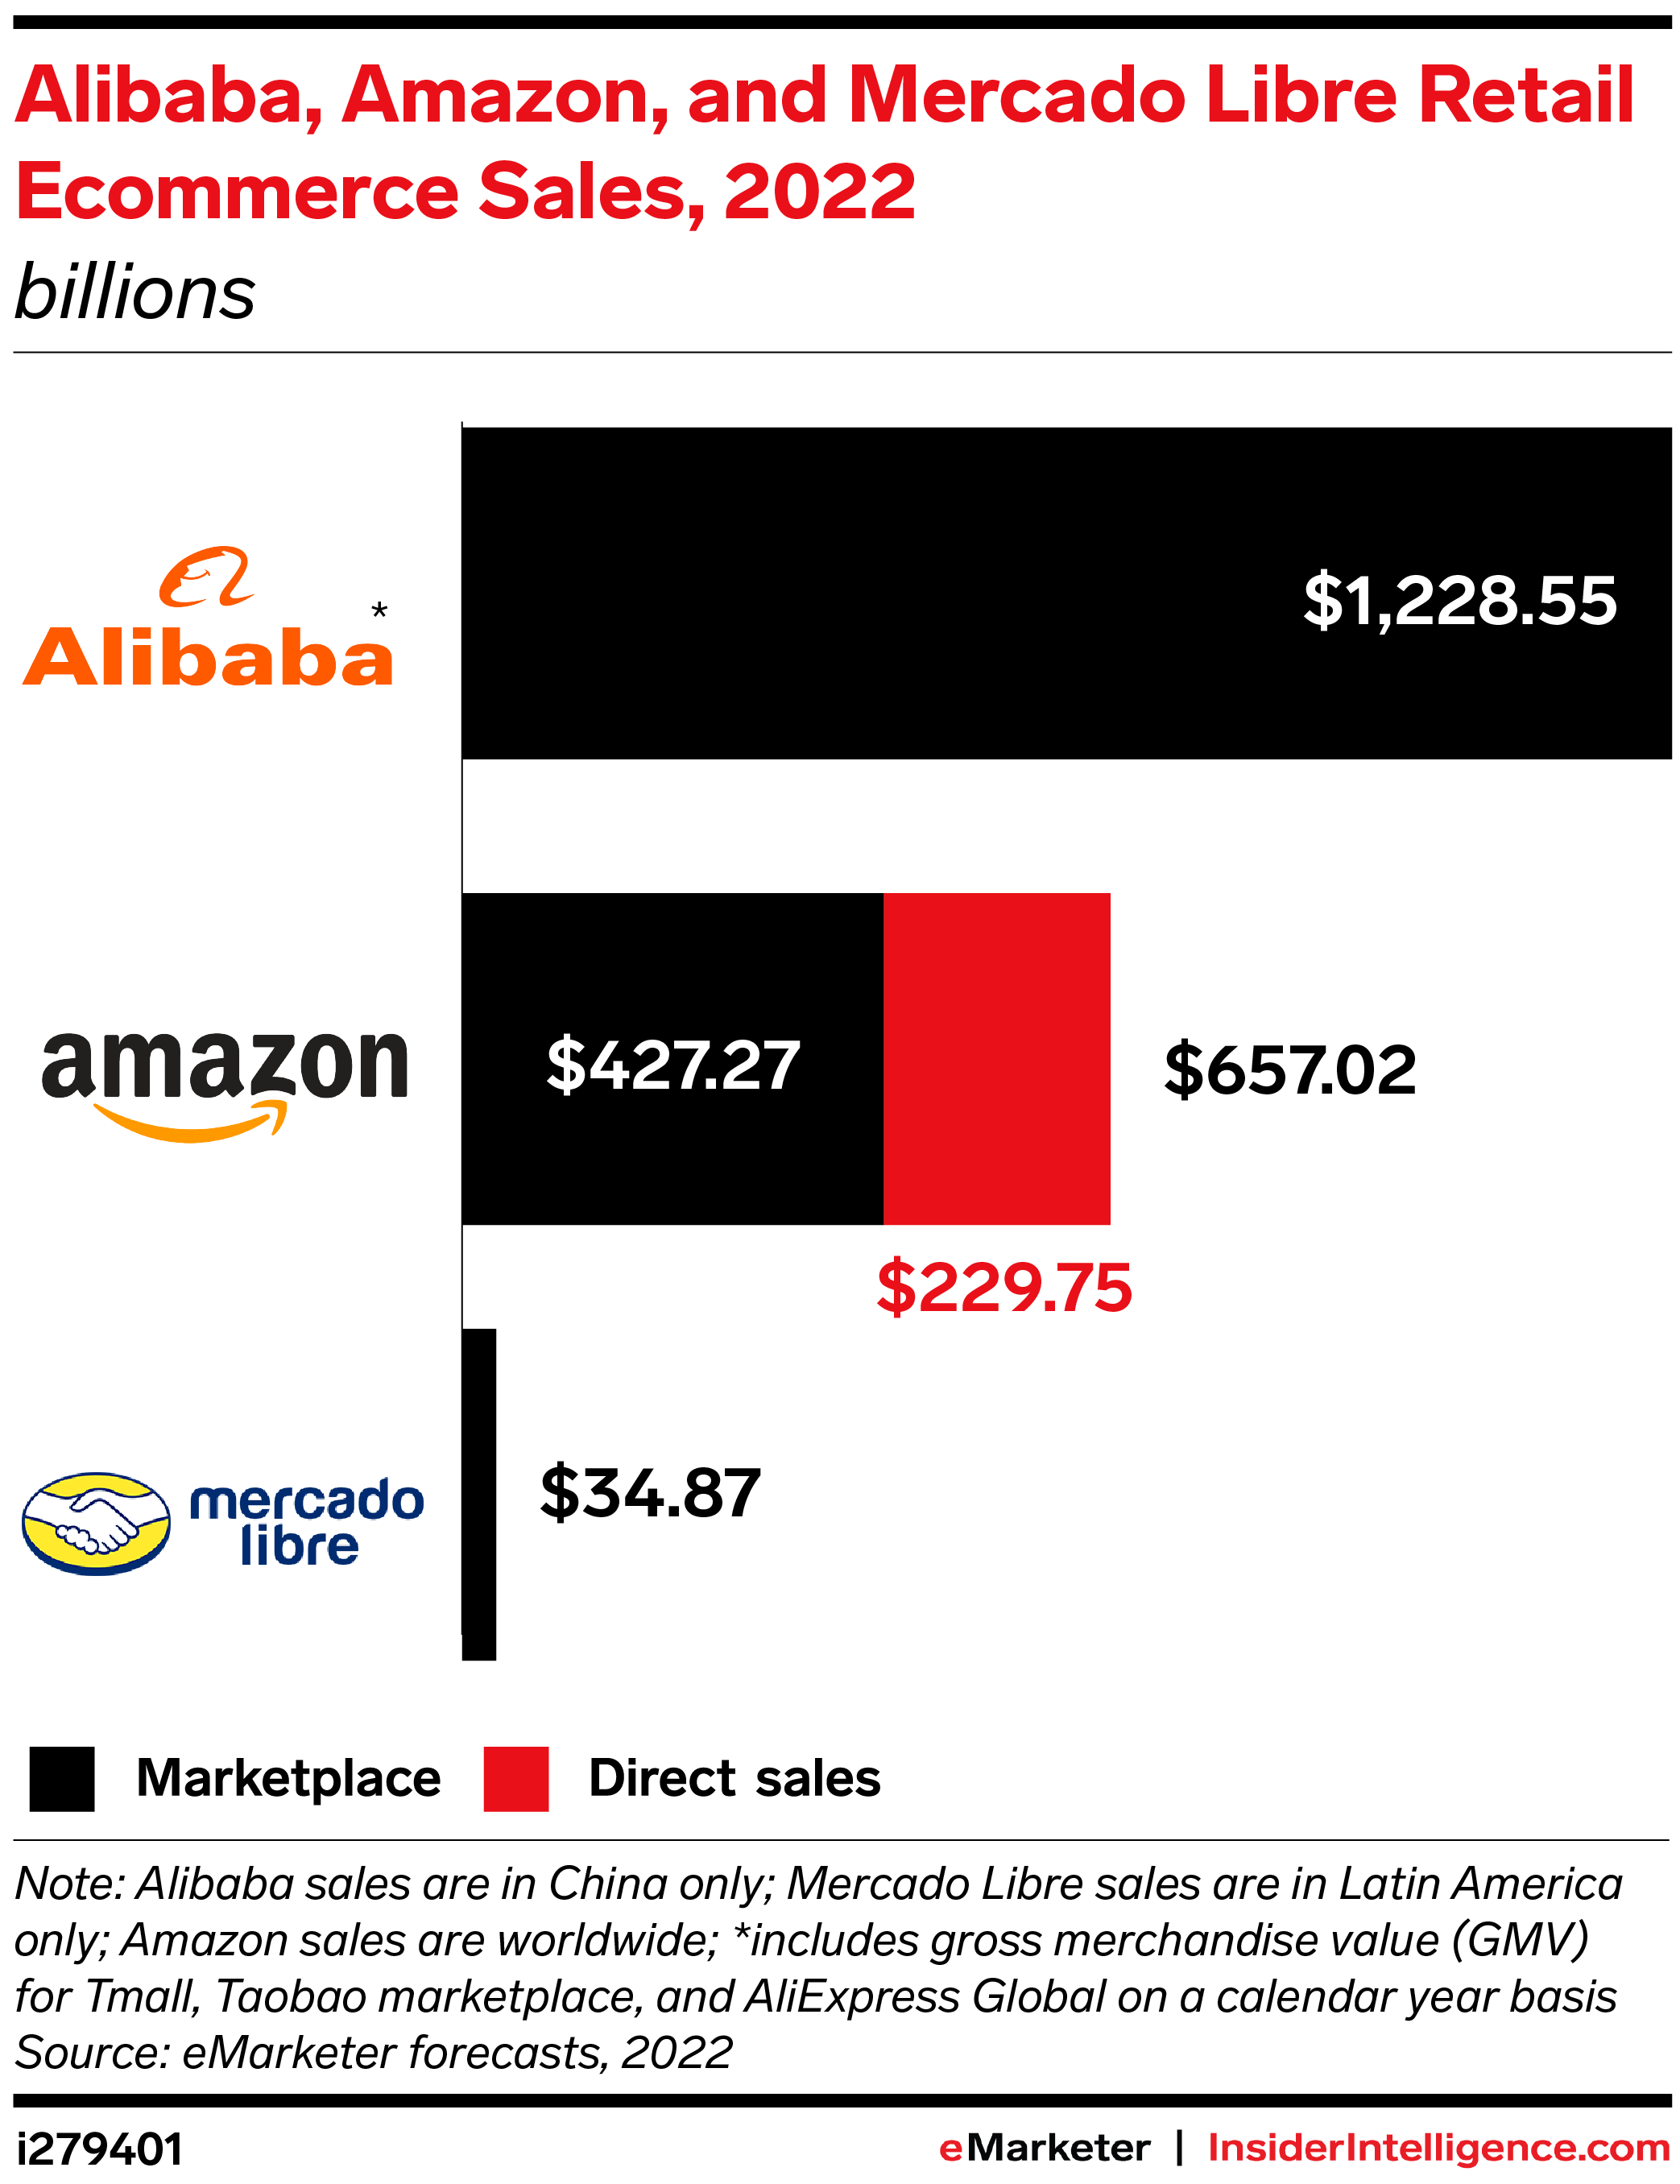 Alibaba, Amazon, and Mercado Libre Retail Ecommerce Sales, 2022 (billions)